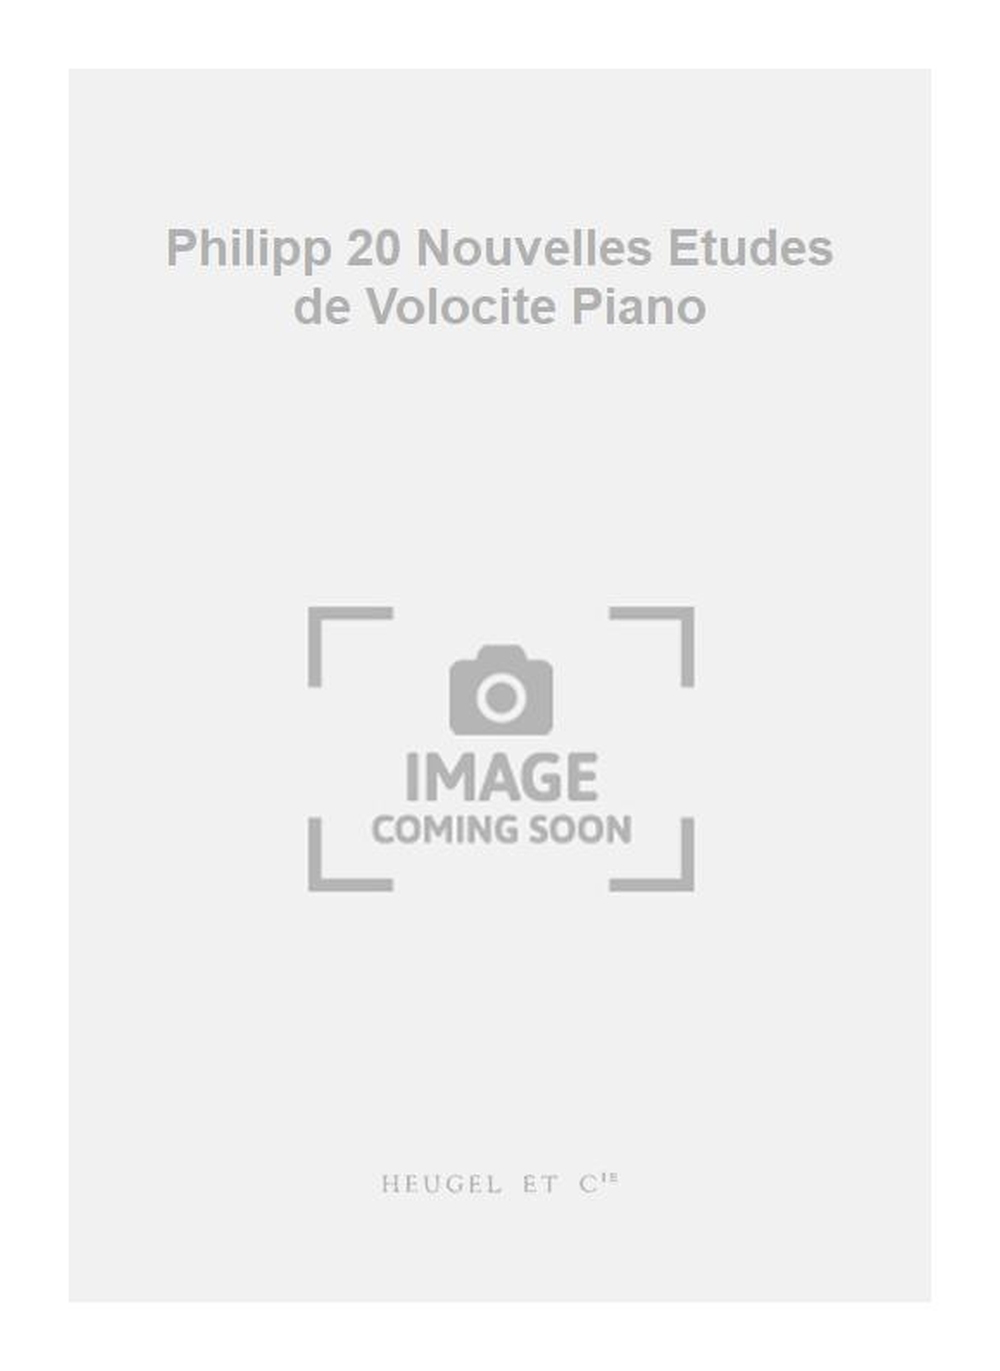 Isidore Philipp: Philipp 20 Nouvelles Etudes de Volocite Piano